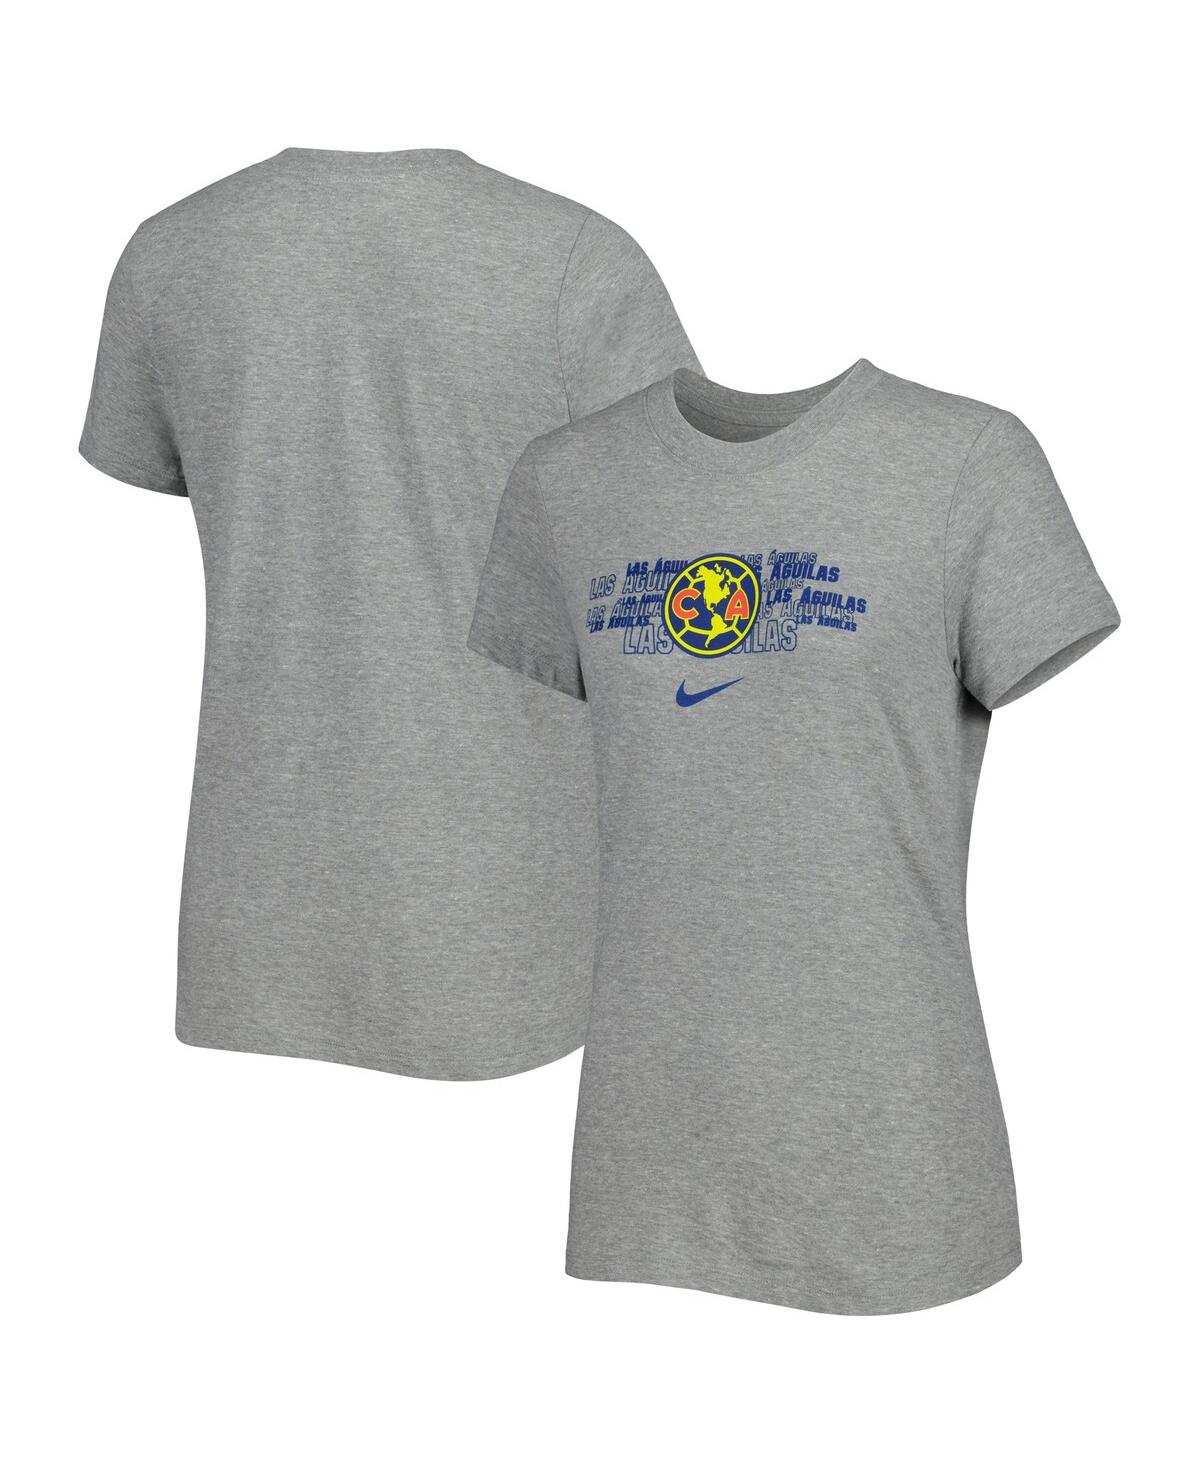 Nike Women's  Gray Club America Varsity Space-dye T-shirt